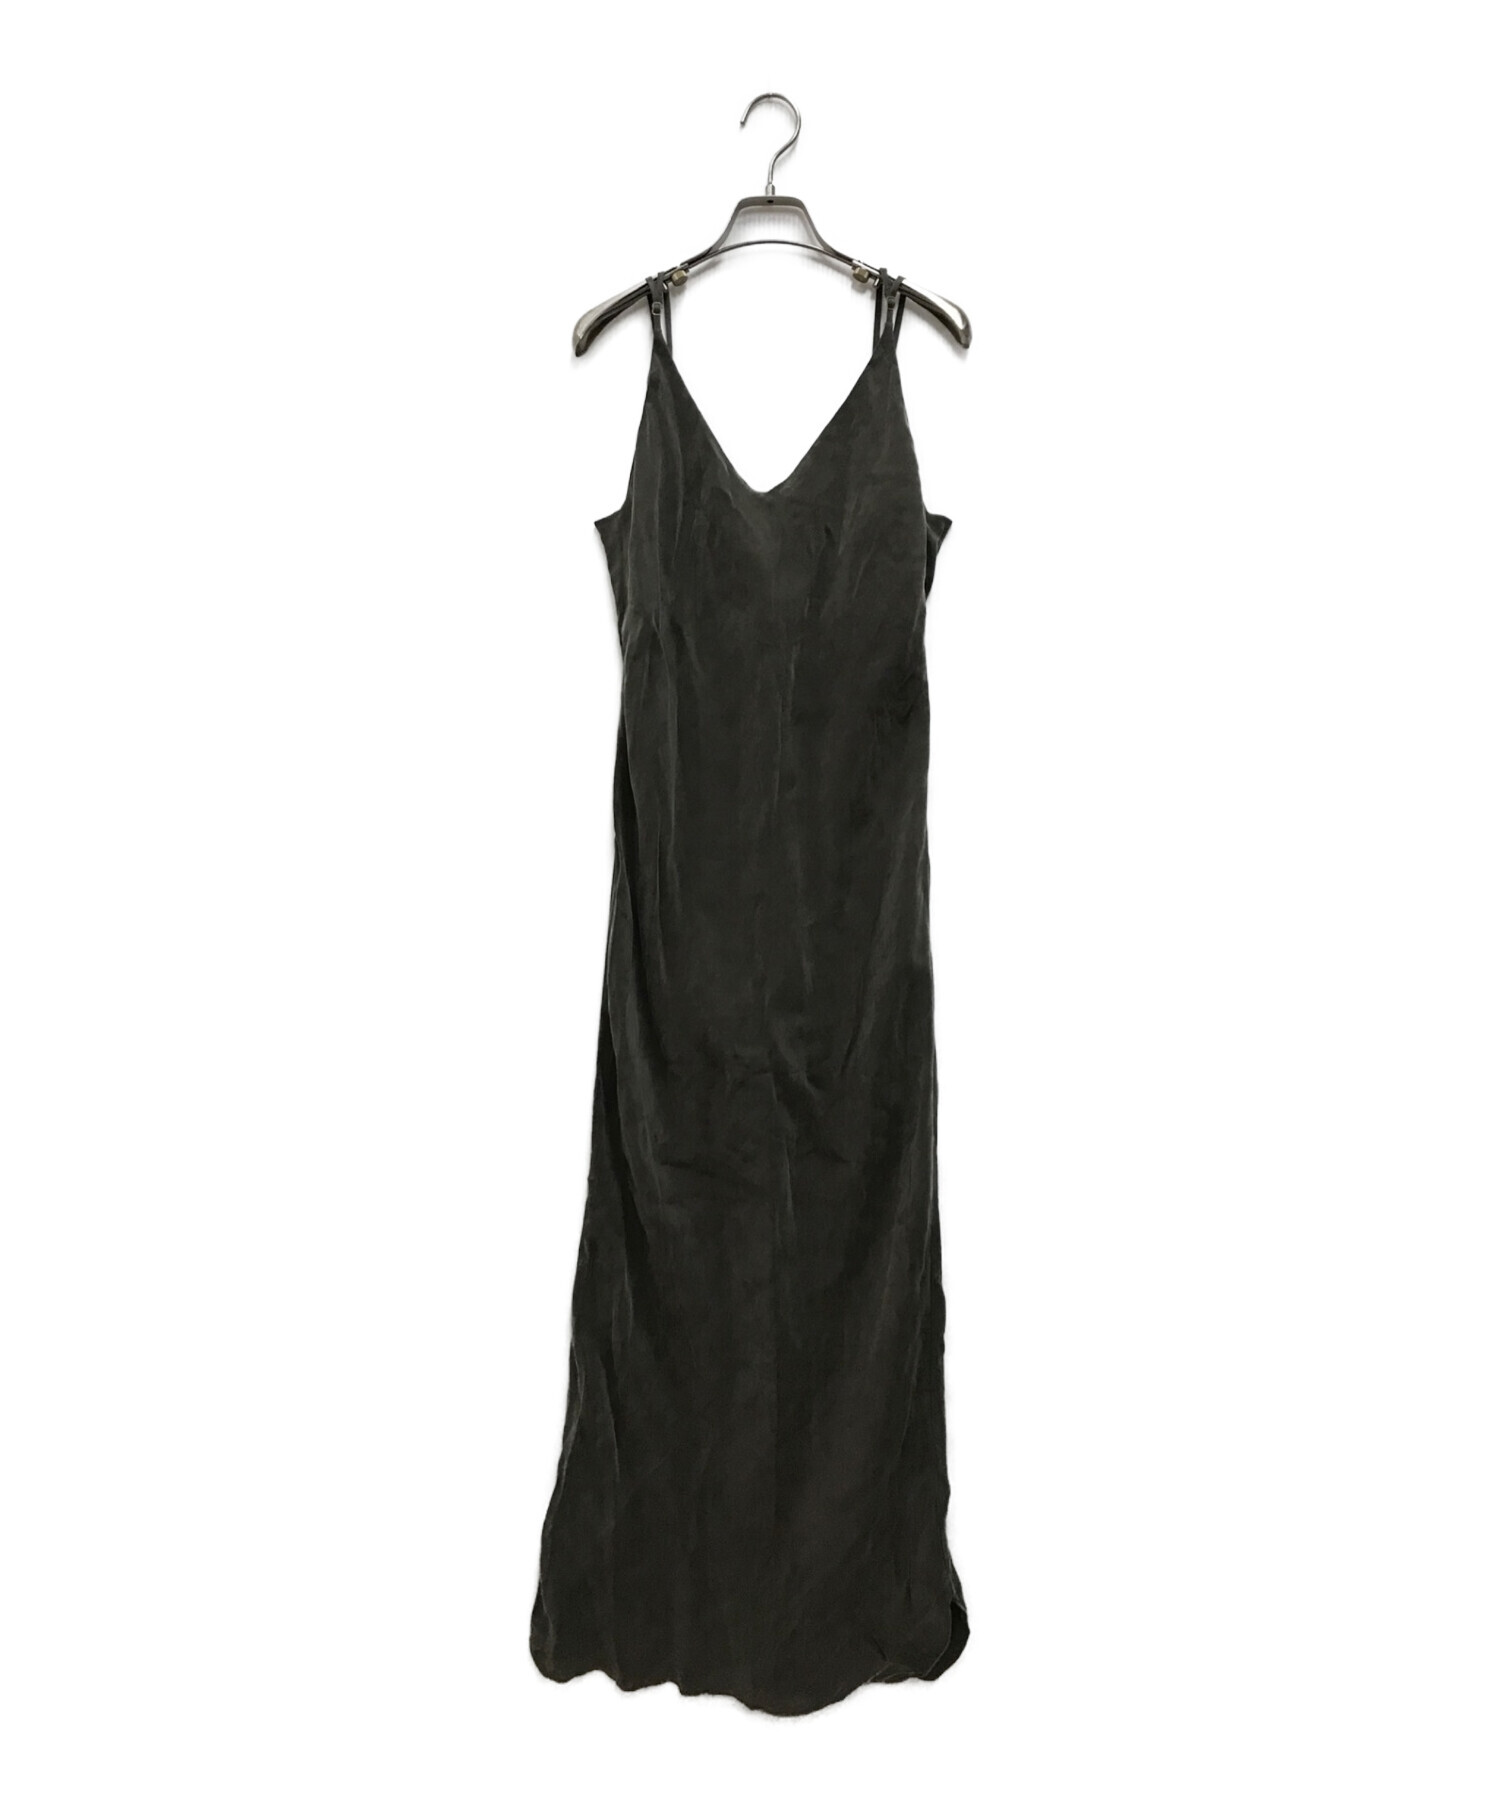 OZMA (オズマ) Cupra Cami Dress グレー サイズ:M